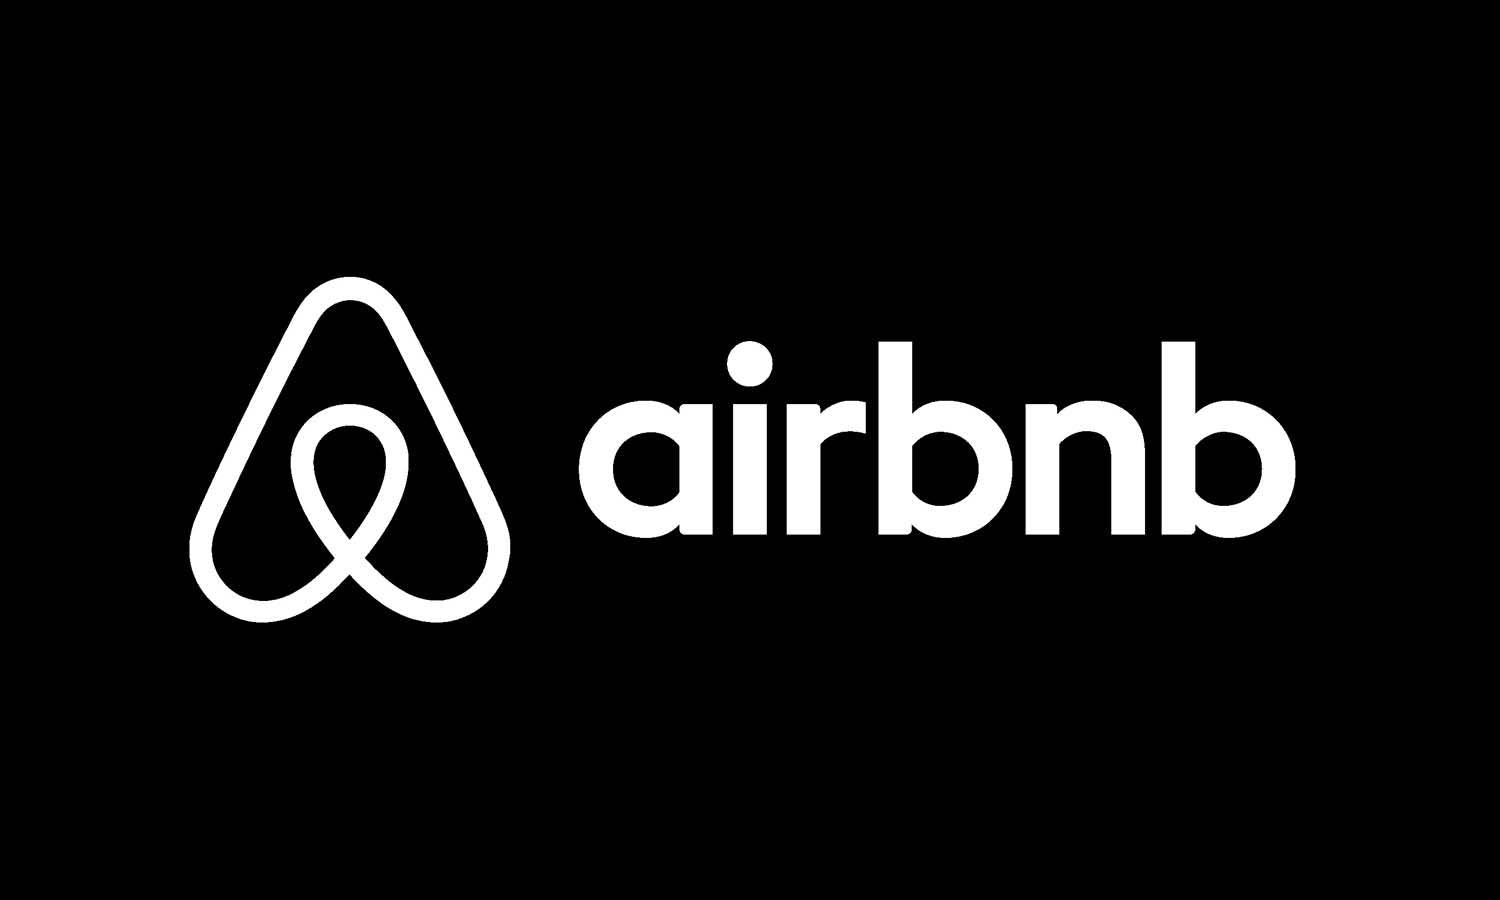 Airbnb Logo Design: History & Evolution - Kreafolk